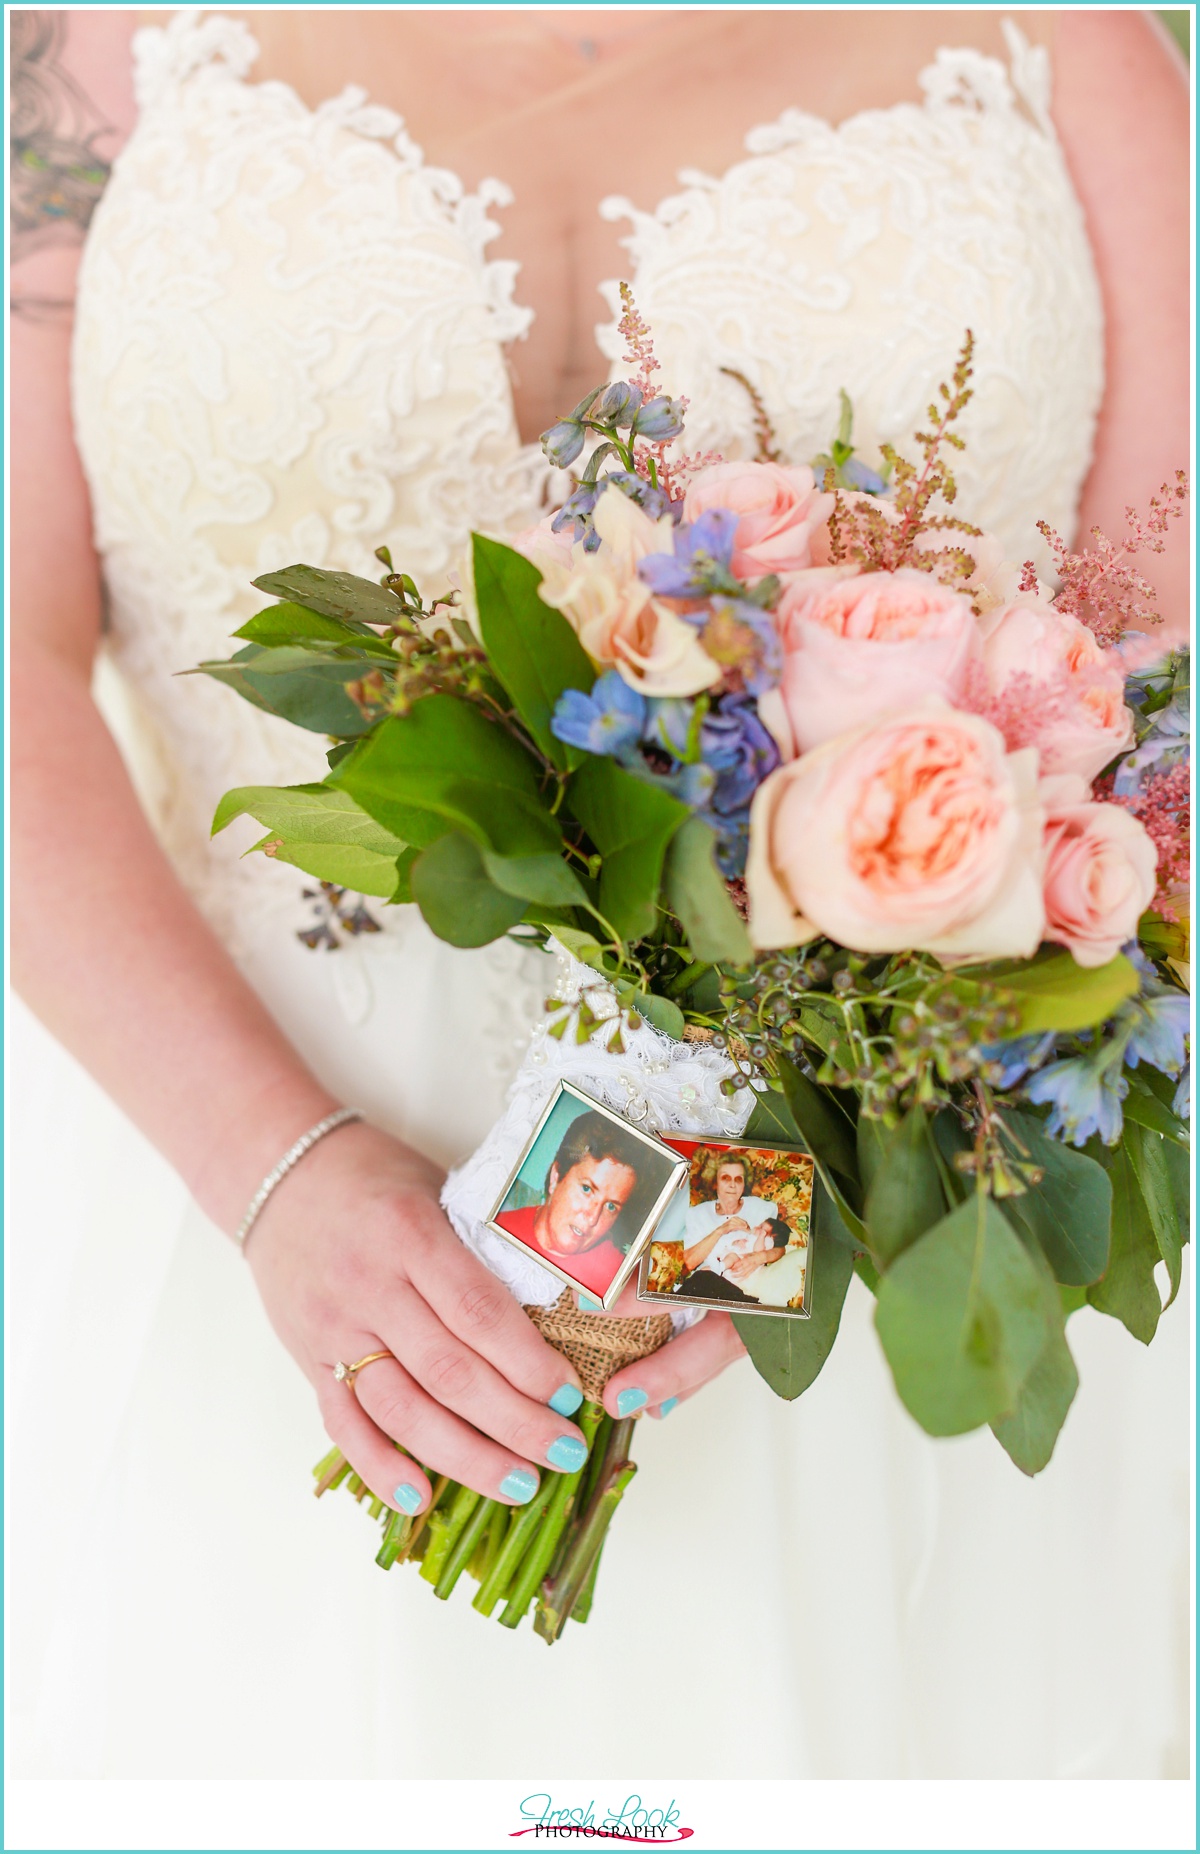 Memorial Bouquet for Bride